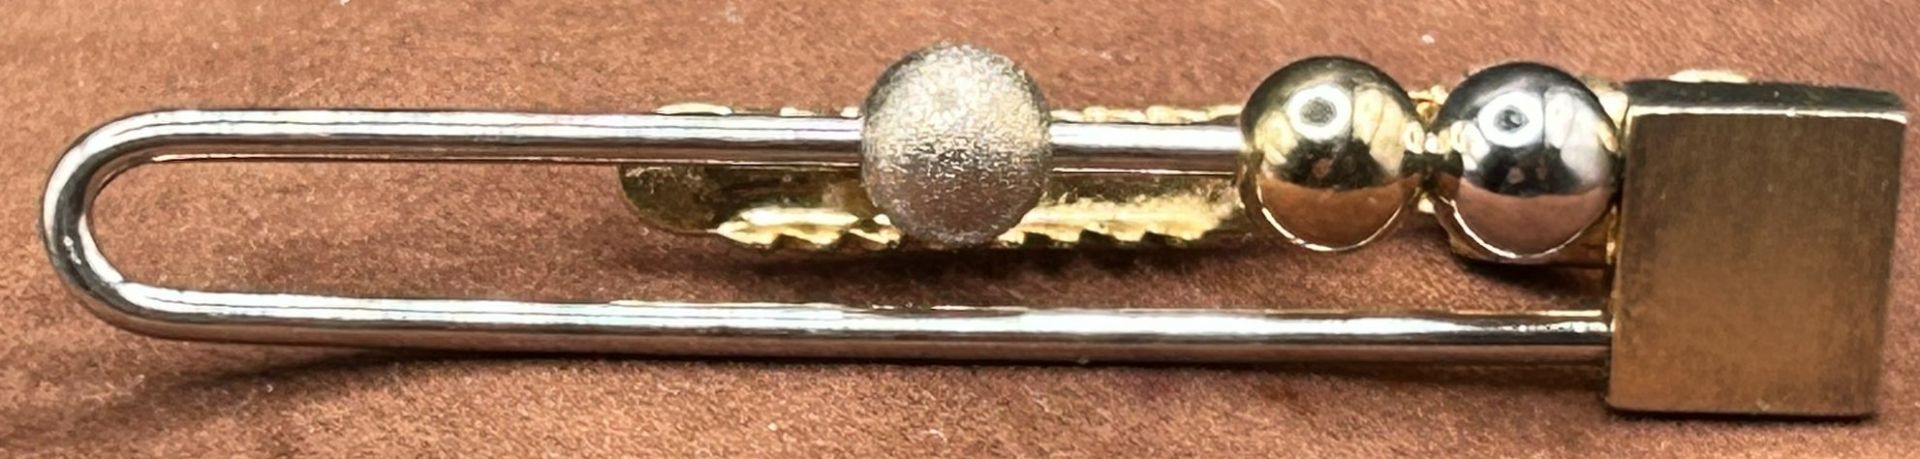 Krawattenklammer, Silber-925- mit 3 beweglichen Kugel, Klamme Metall, L-6,2 cm, 10,2 gr